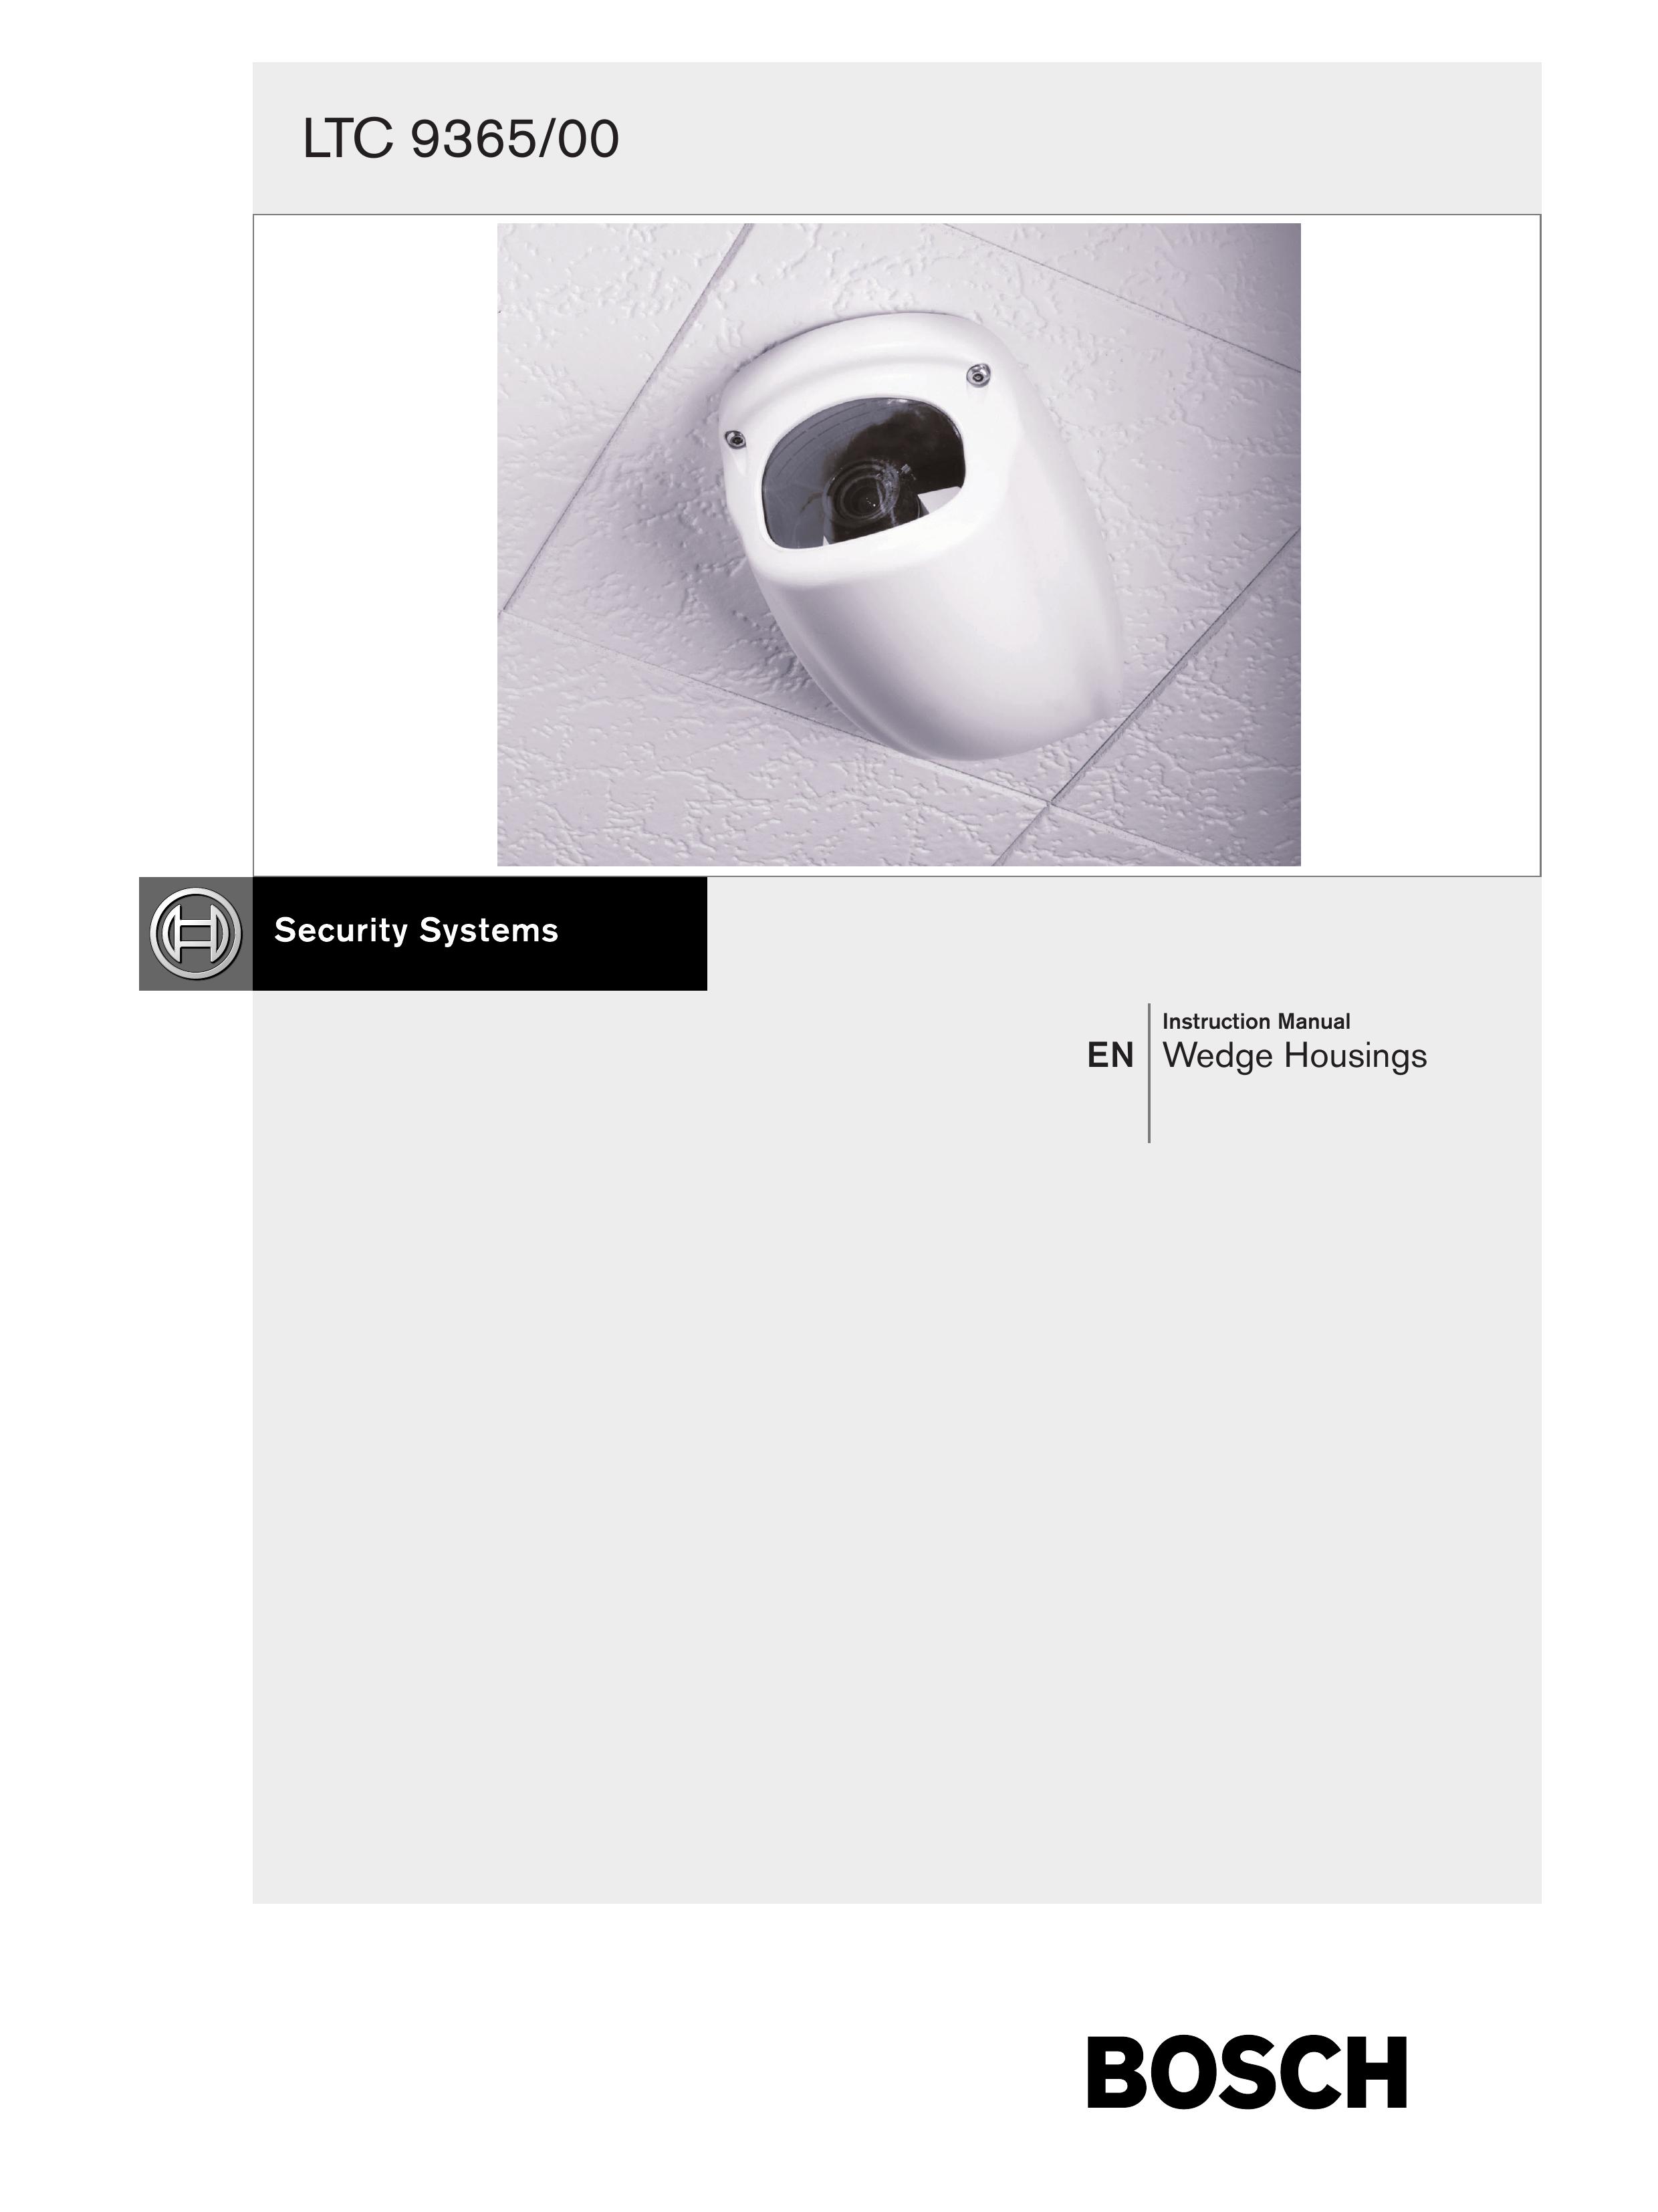 Bosch Appliances LTC 9365/00 Security Camera User Manual